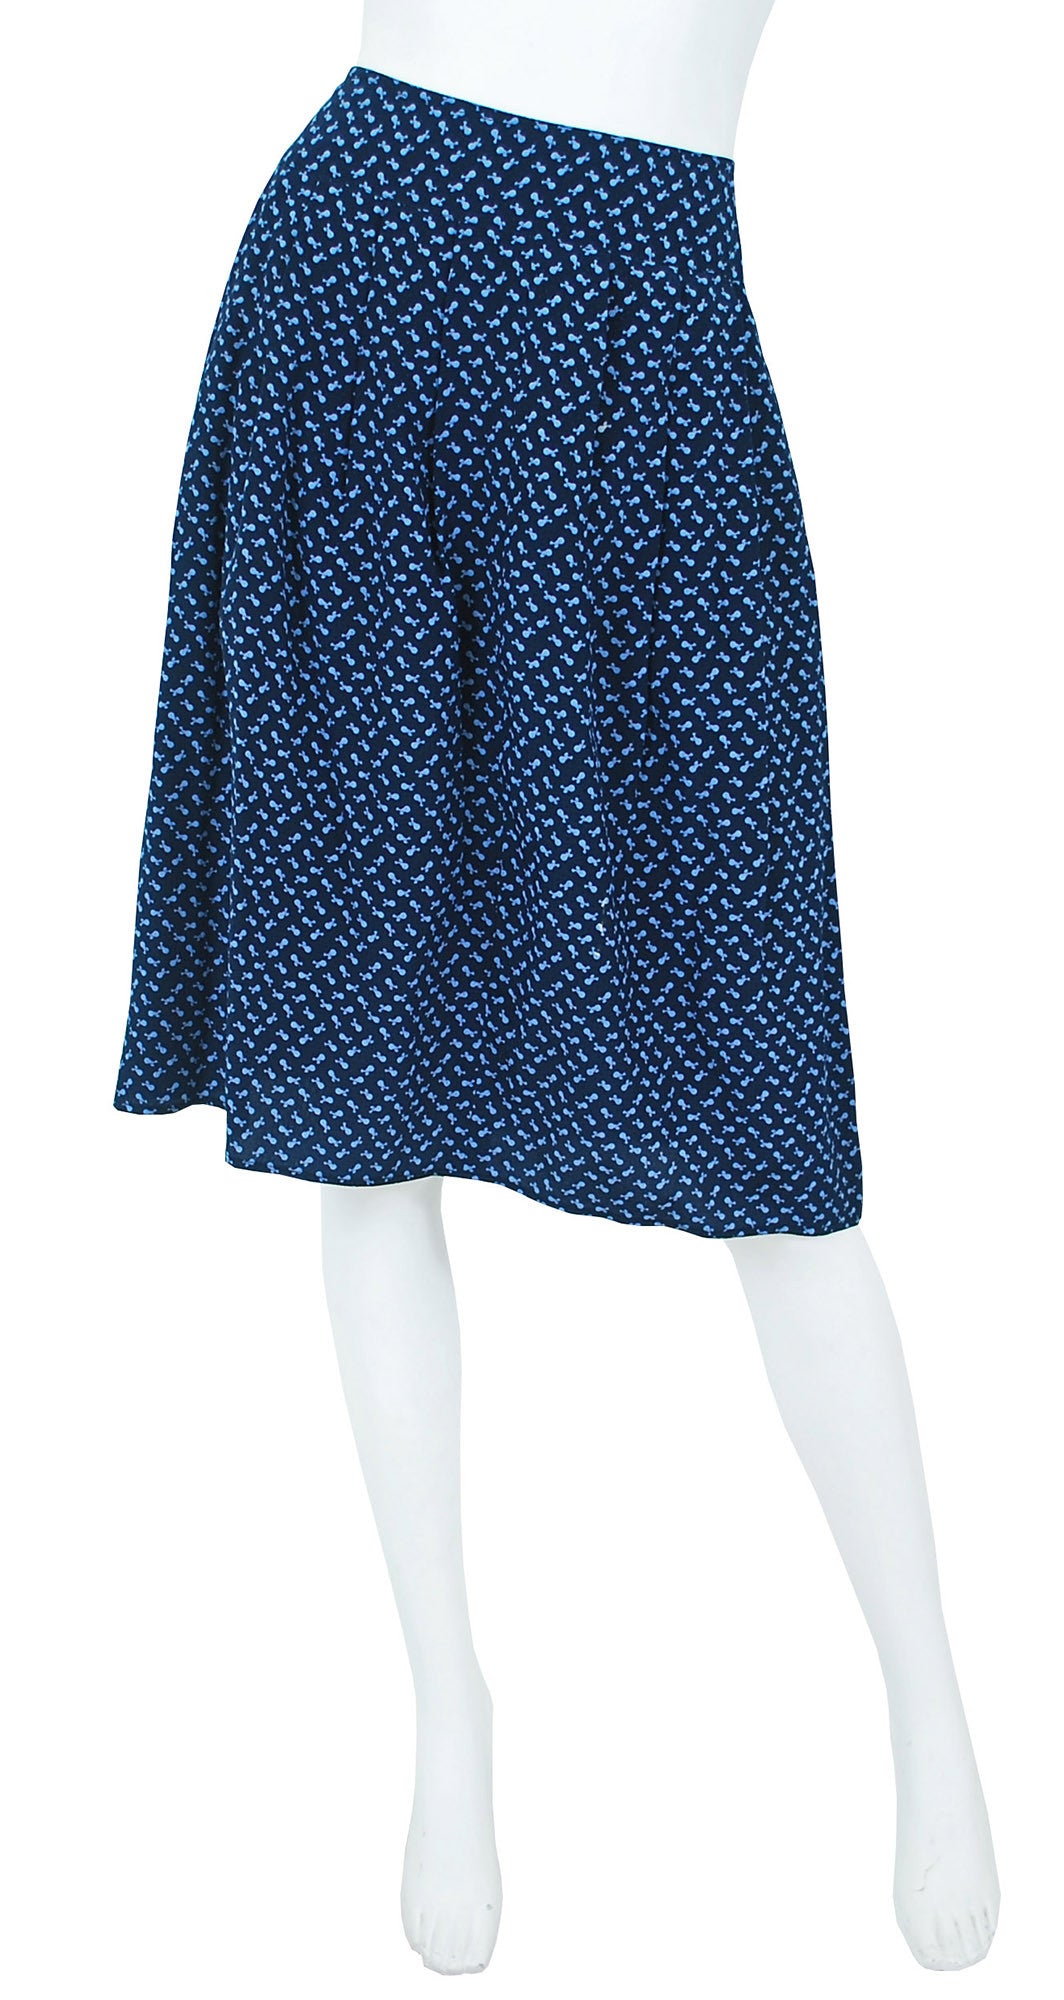 1970s Floral Textured Navy Silk Skirt